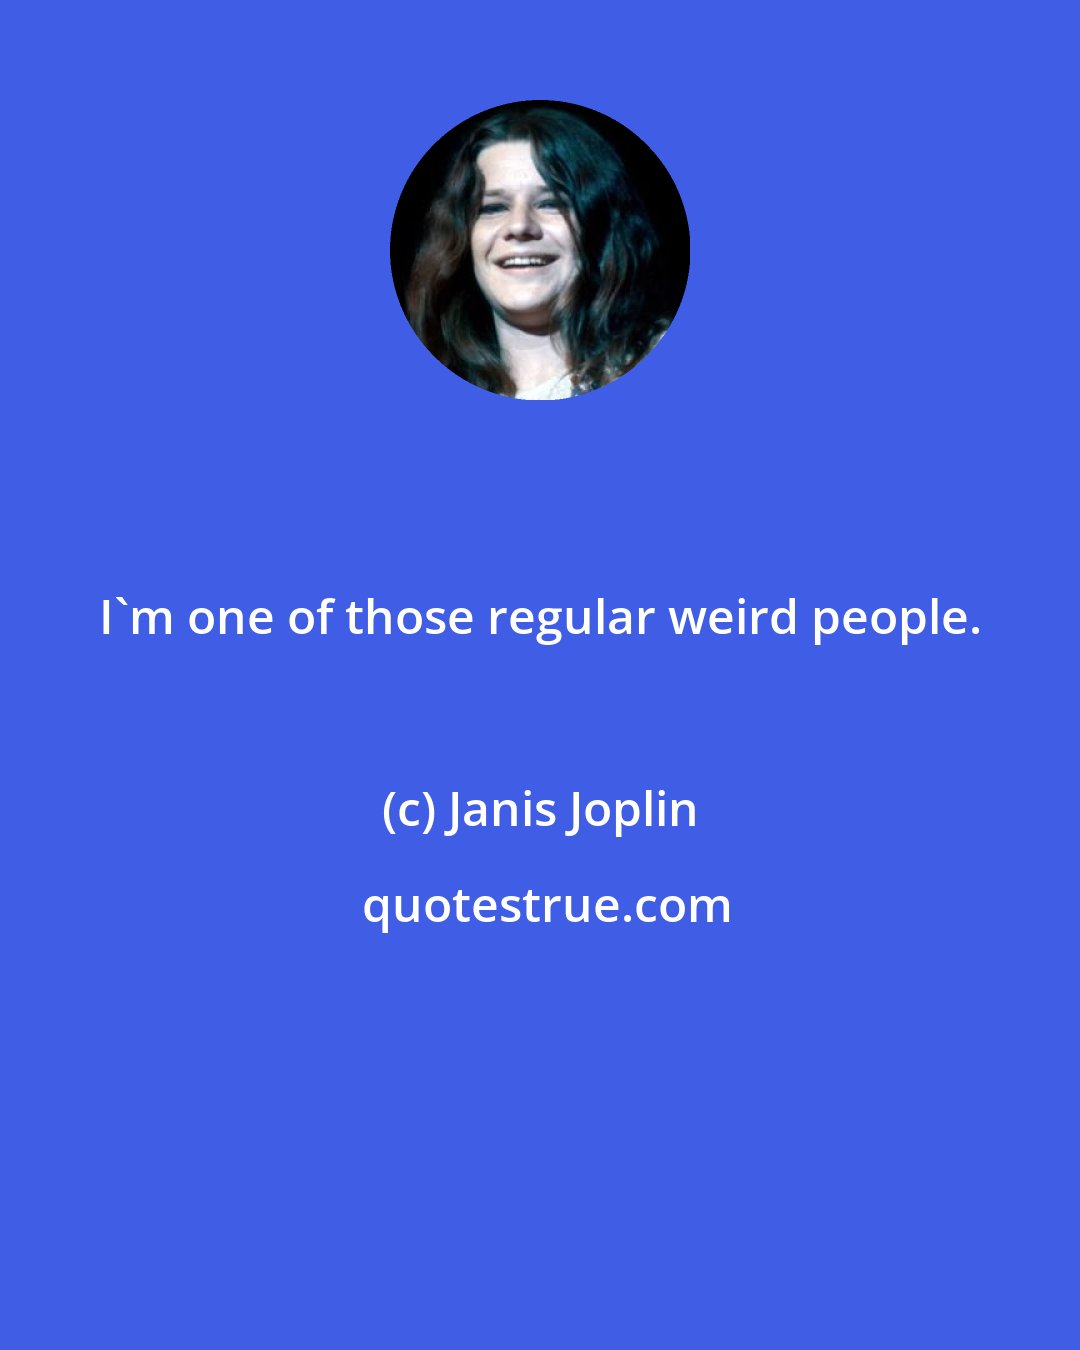 Janis Joplin: I'm one of those regular weird people.